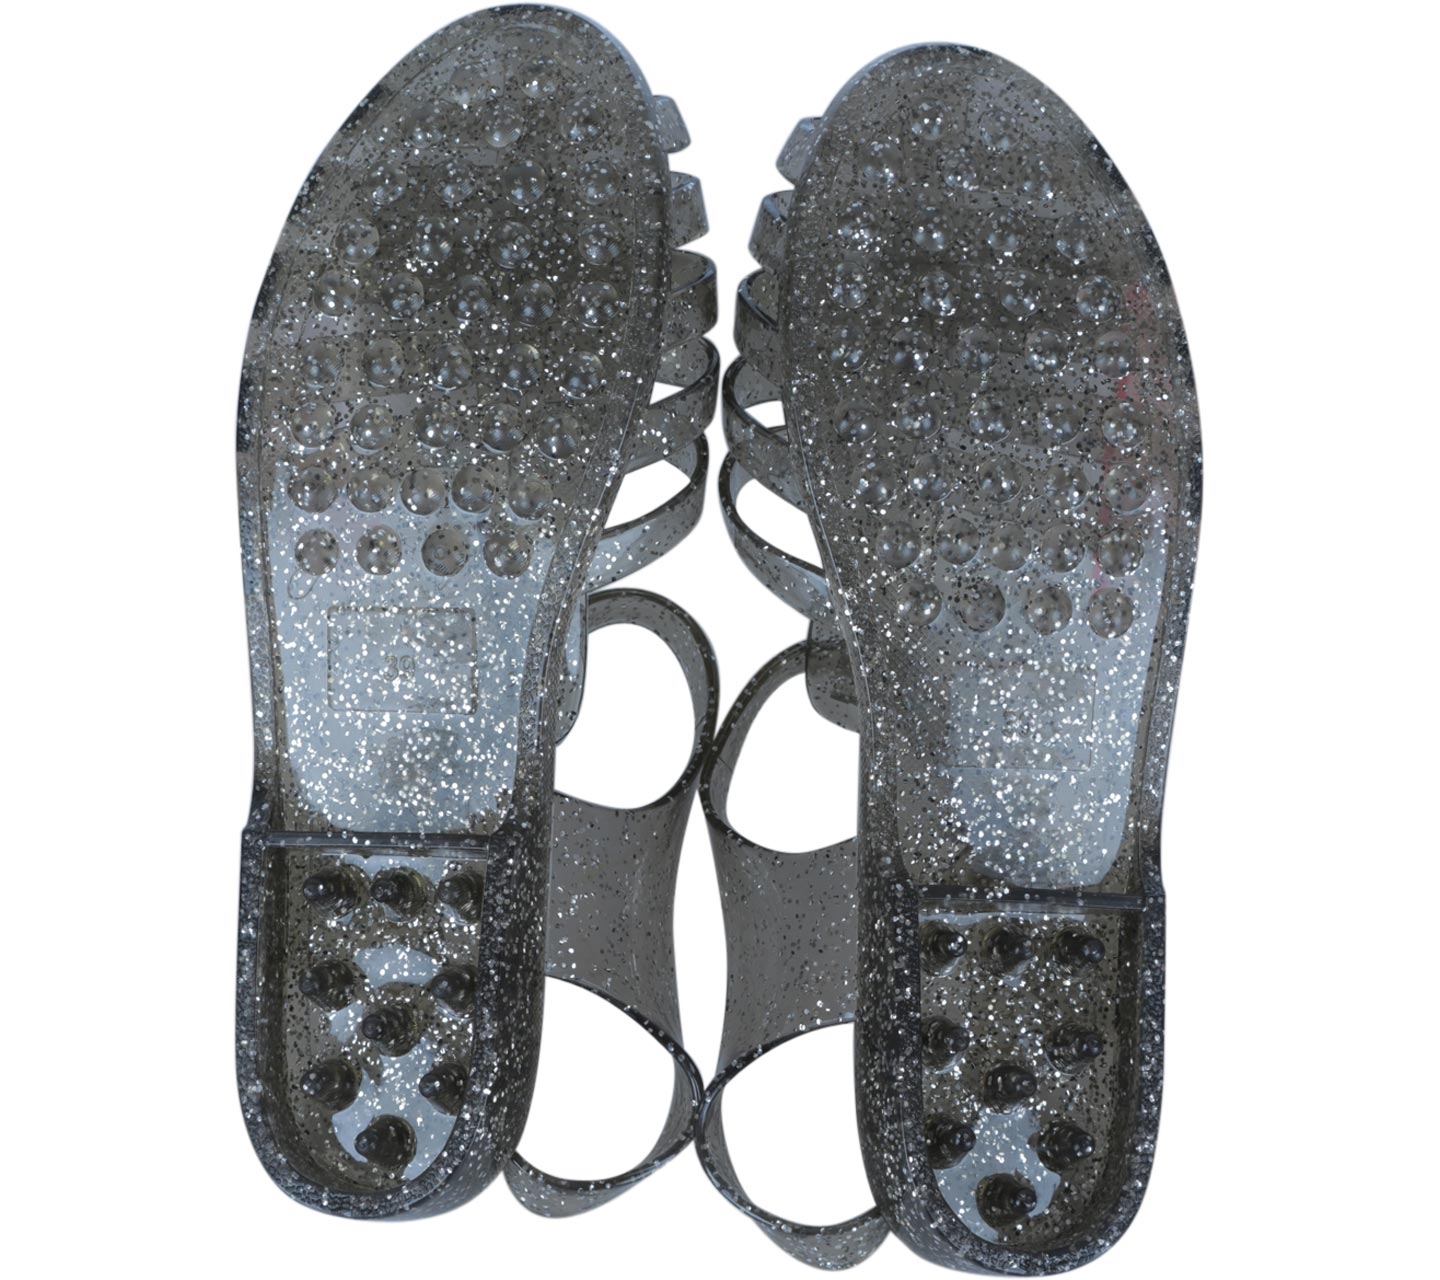 Vincci Black Jelly Glittery Sandals